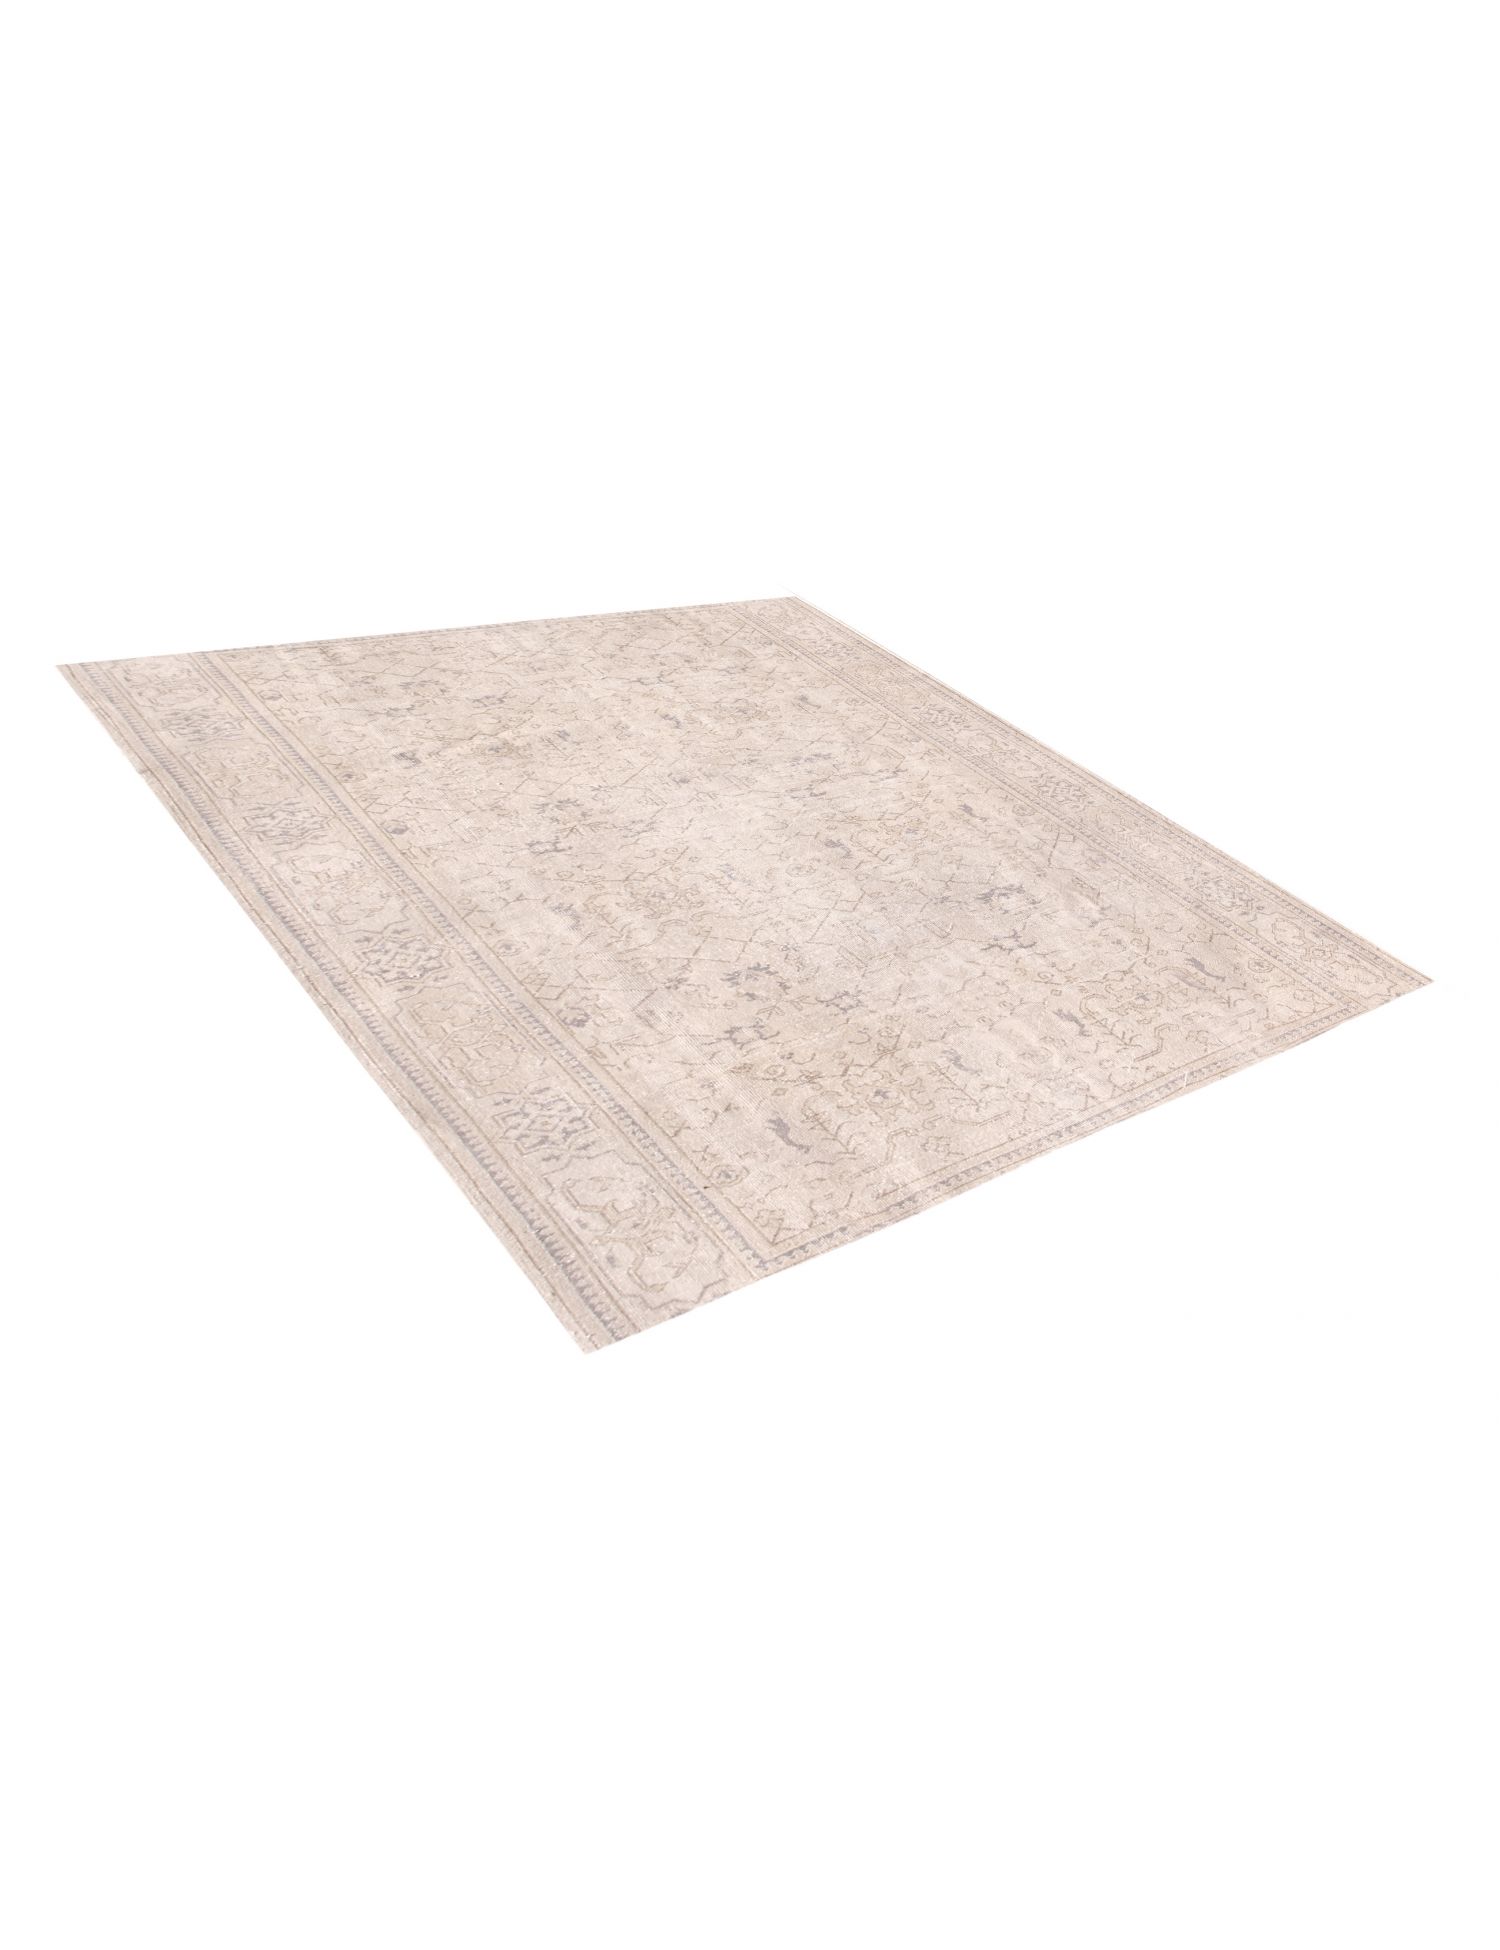 Quadrat  Vintage Teppich  beige <br/>170 x 170 cm